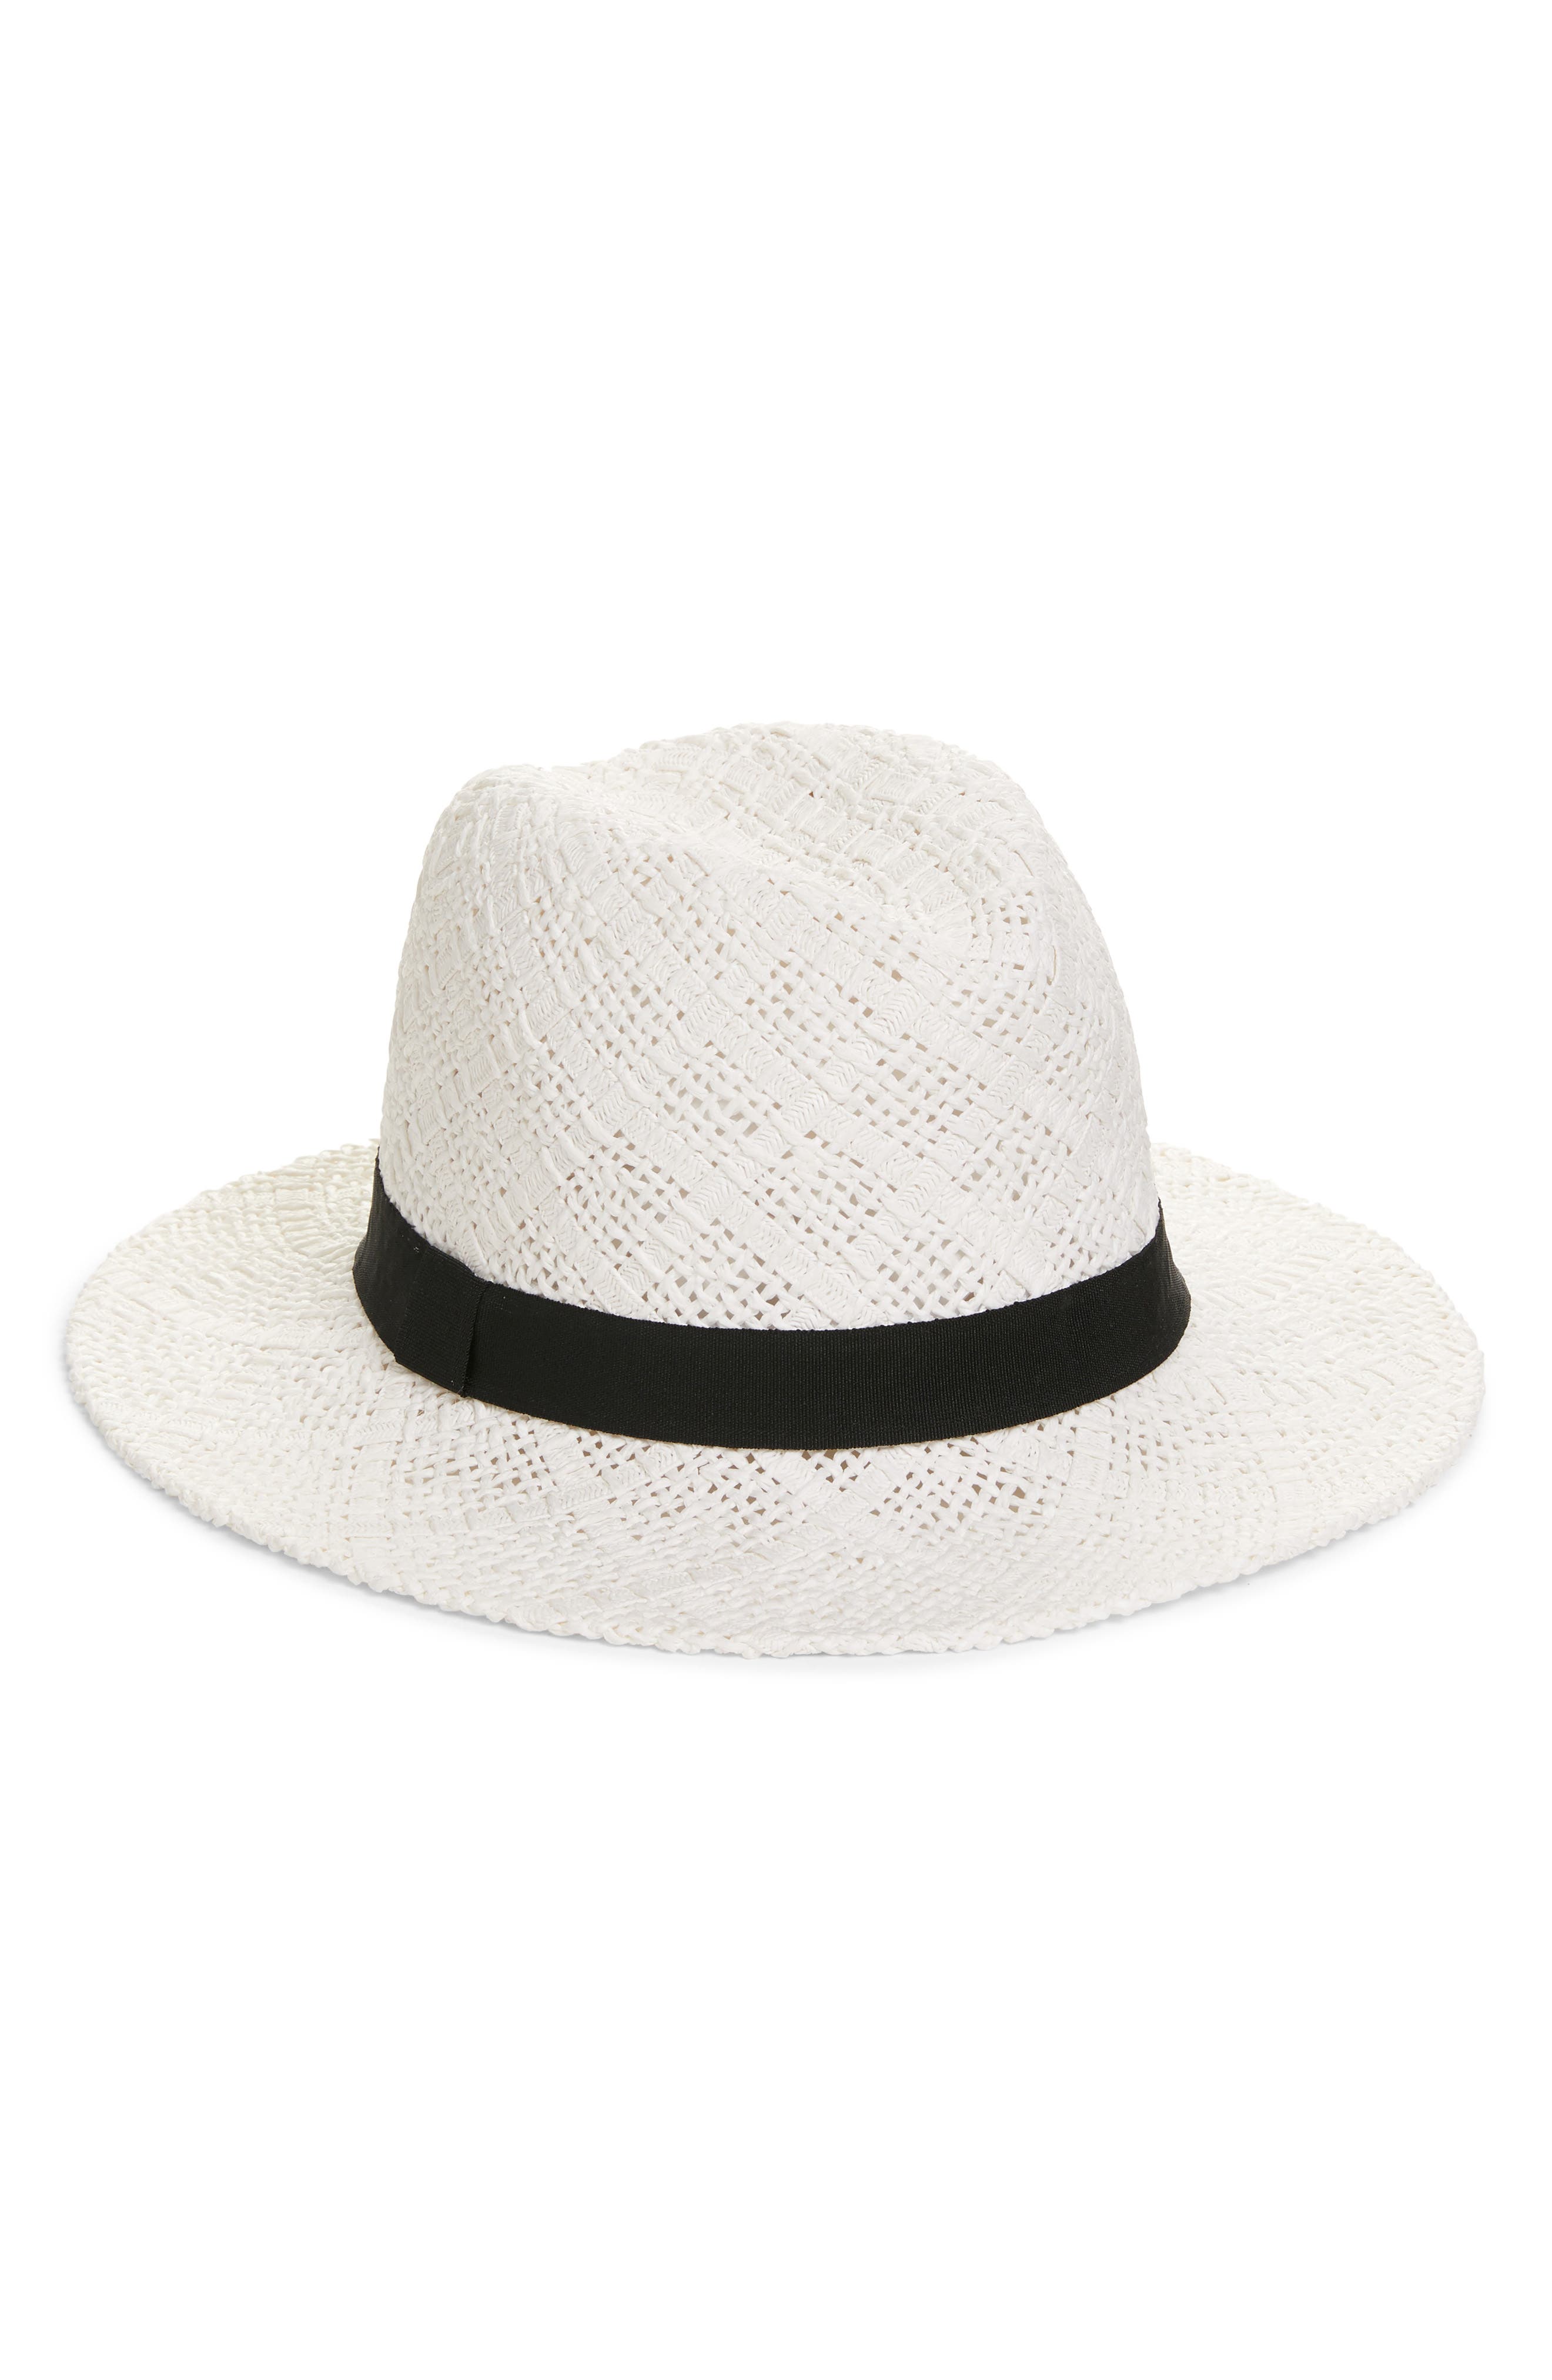 Halogen Novelty Weave Panama Hat In White Combo